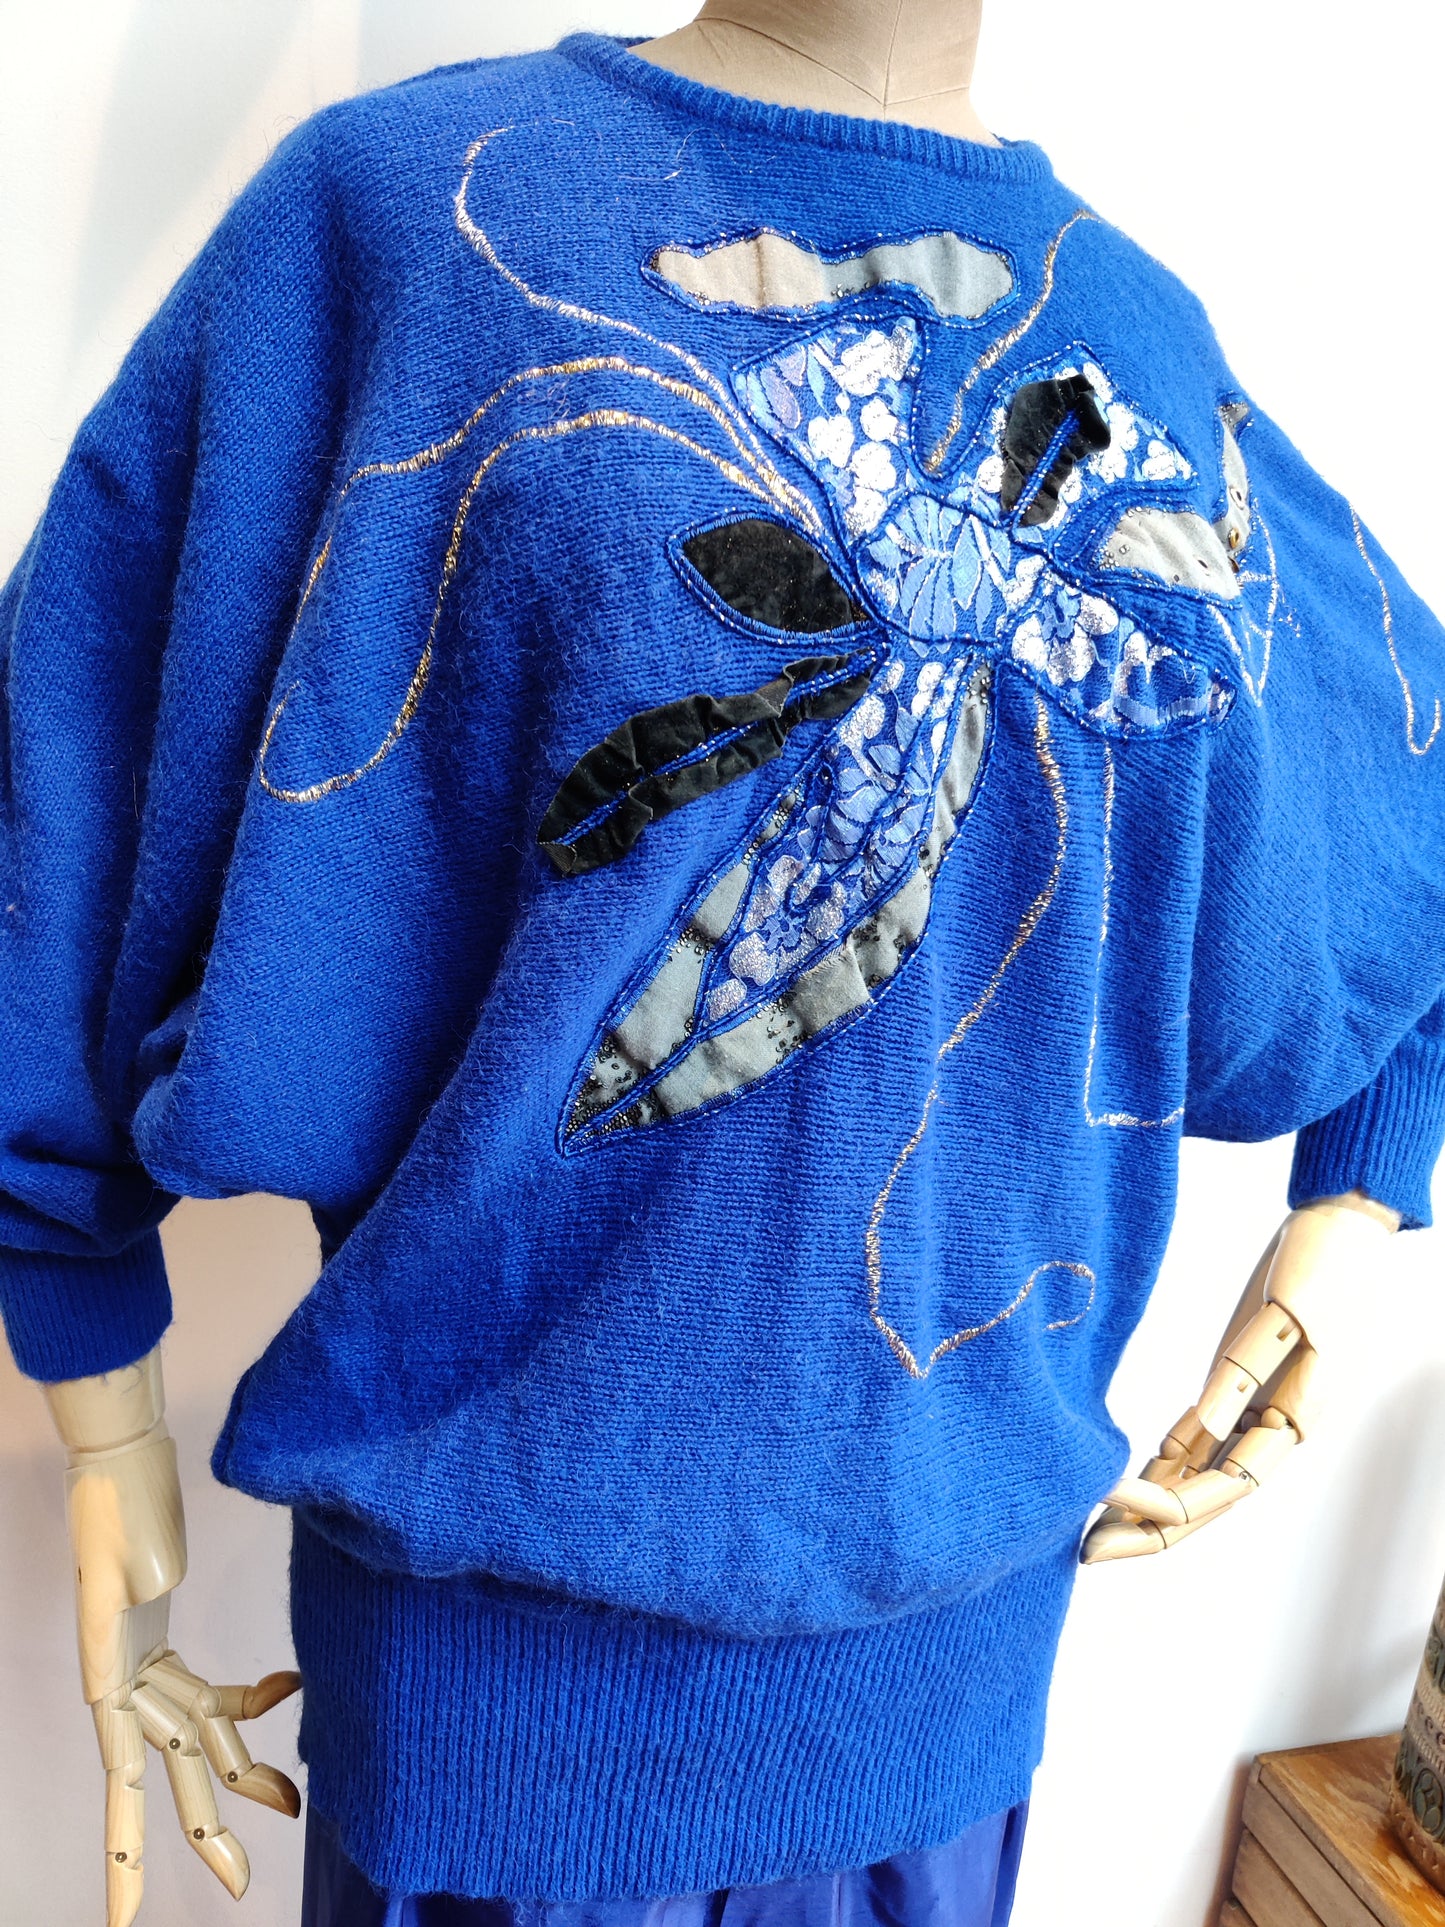 Blue vintage jumper with lace and velvet motif